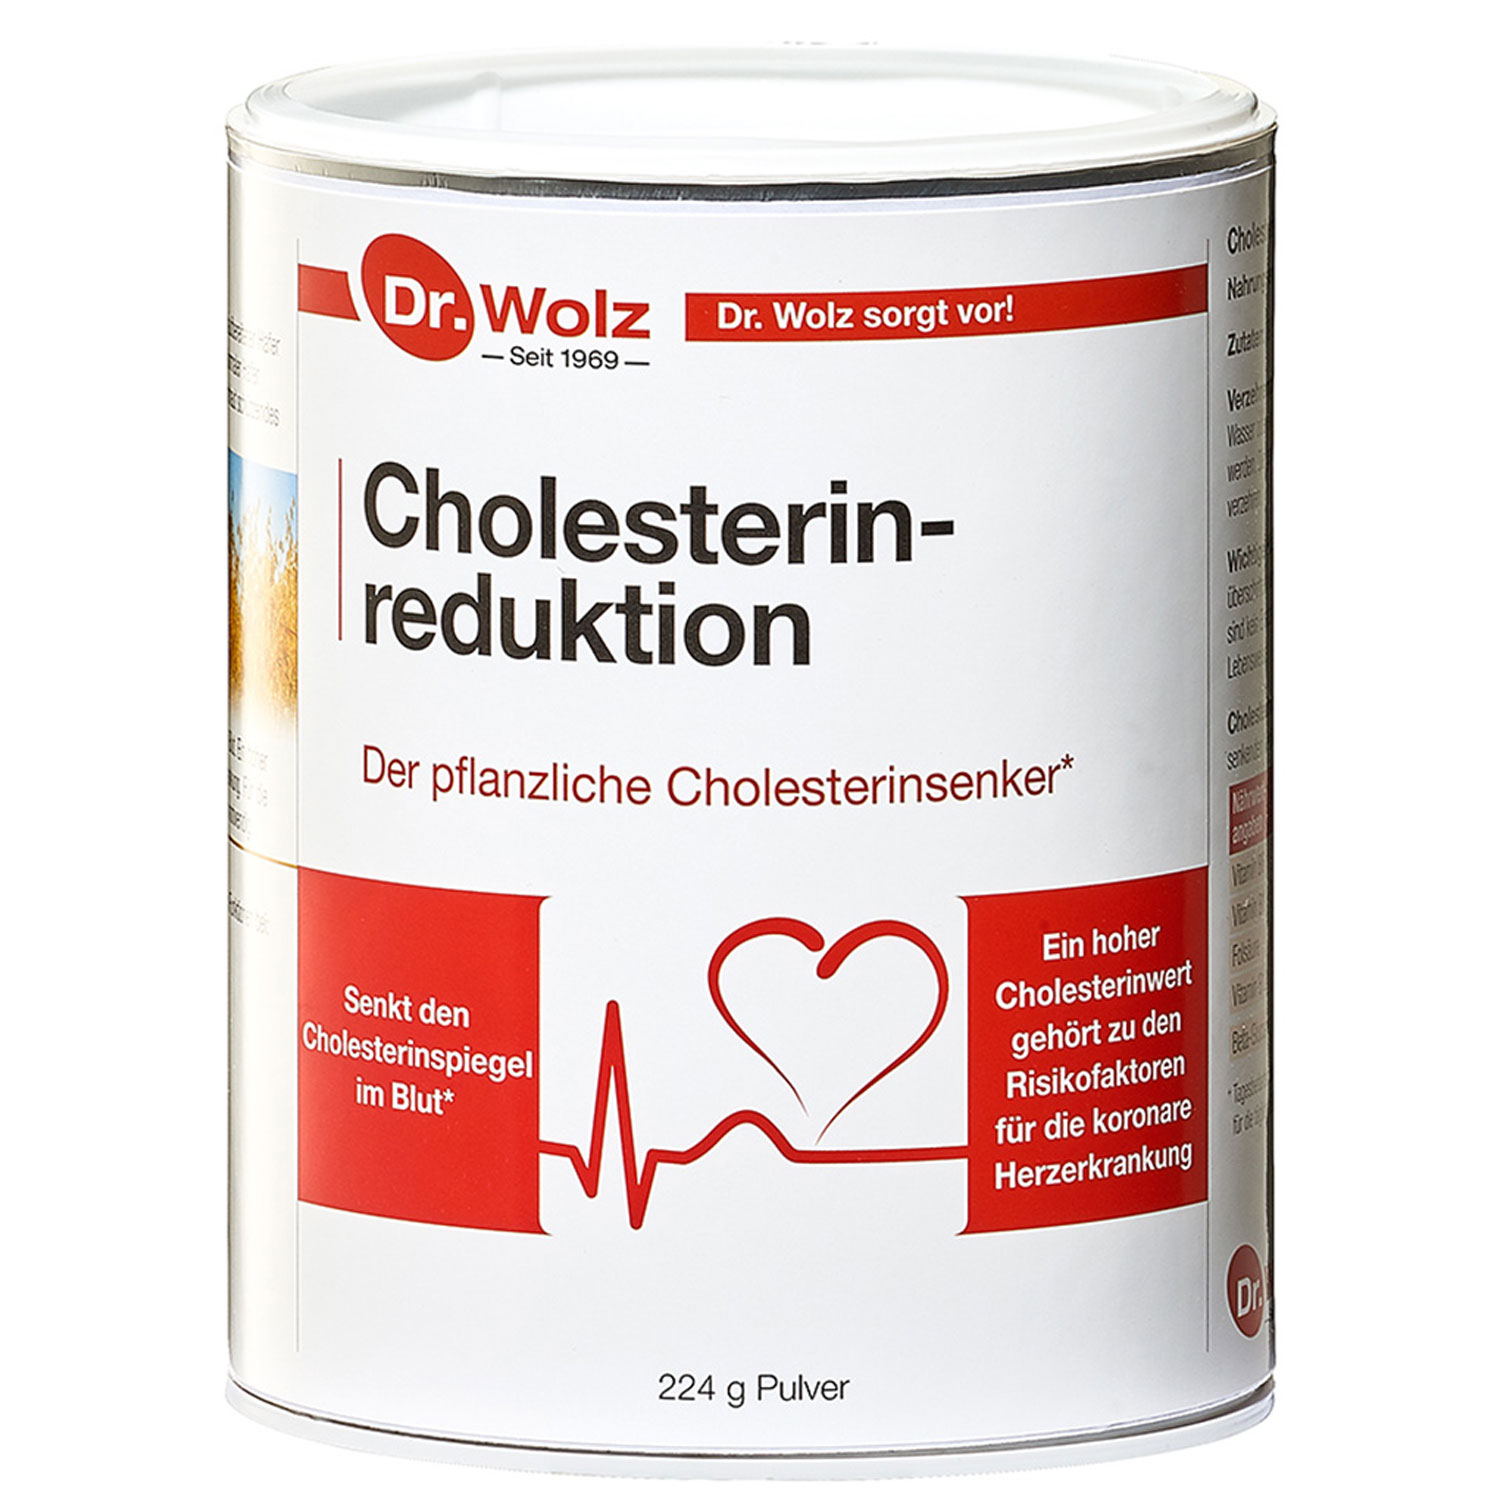 Cholesterinreduktion von Dr. Wolz - 224 g